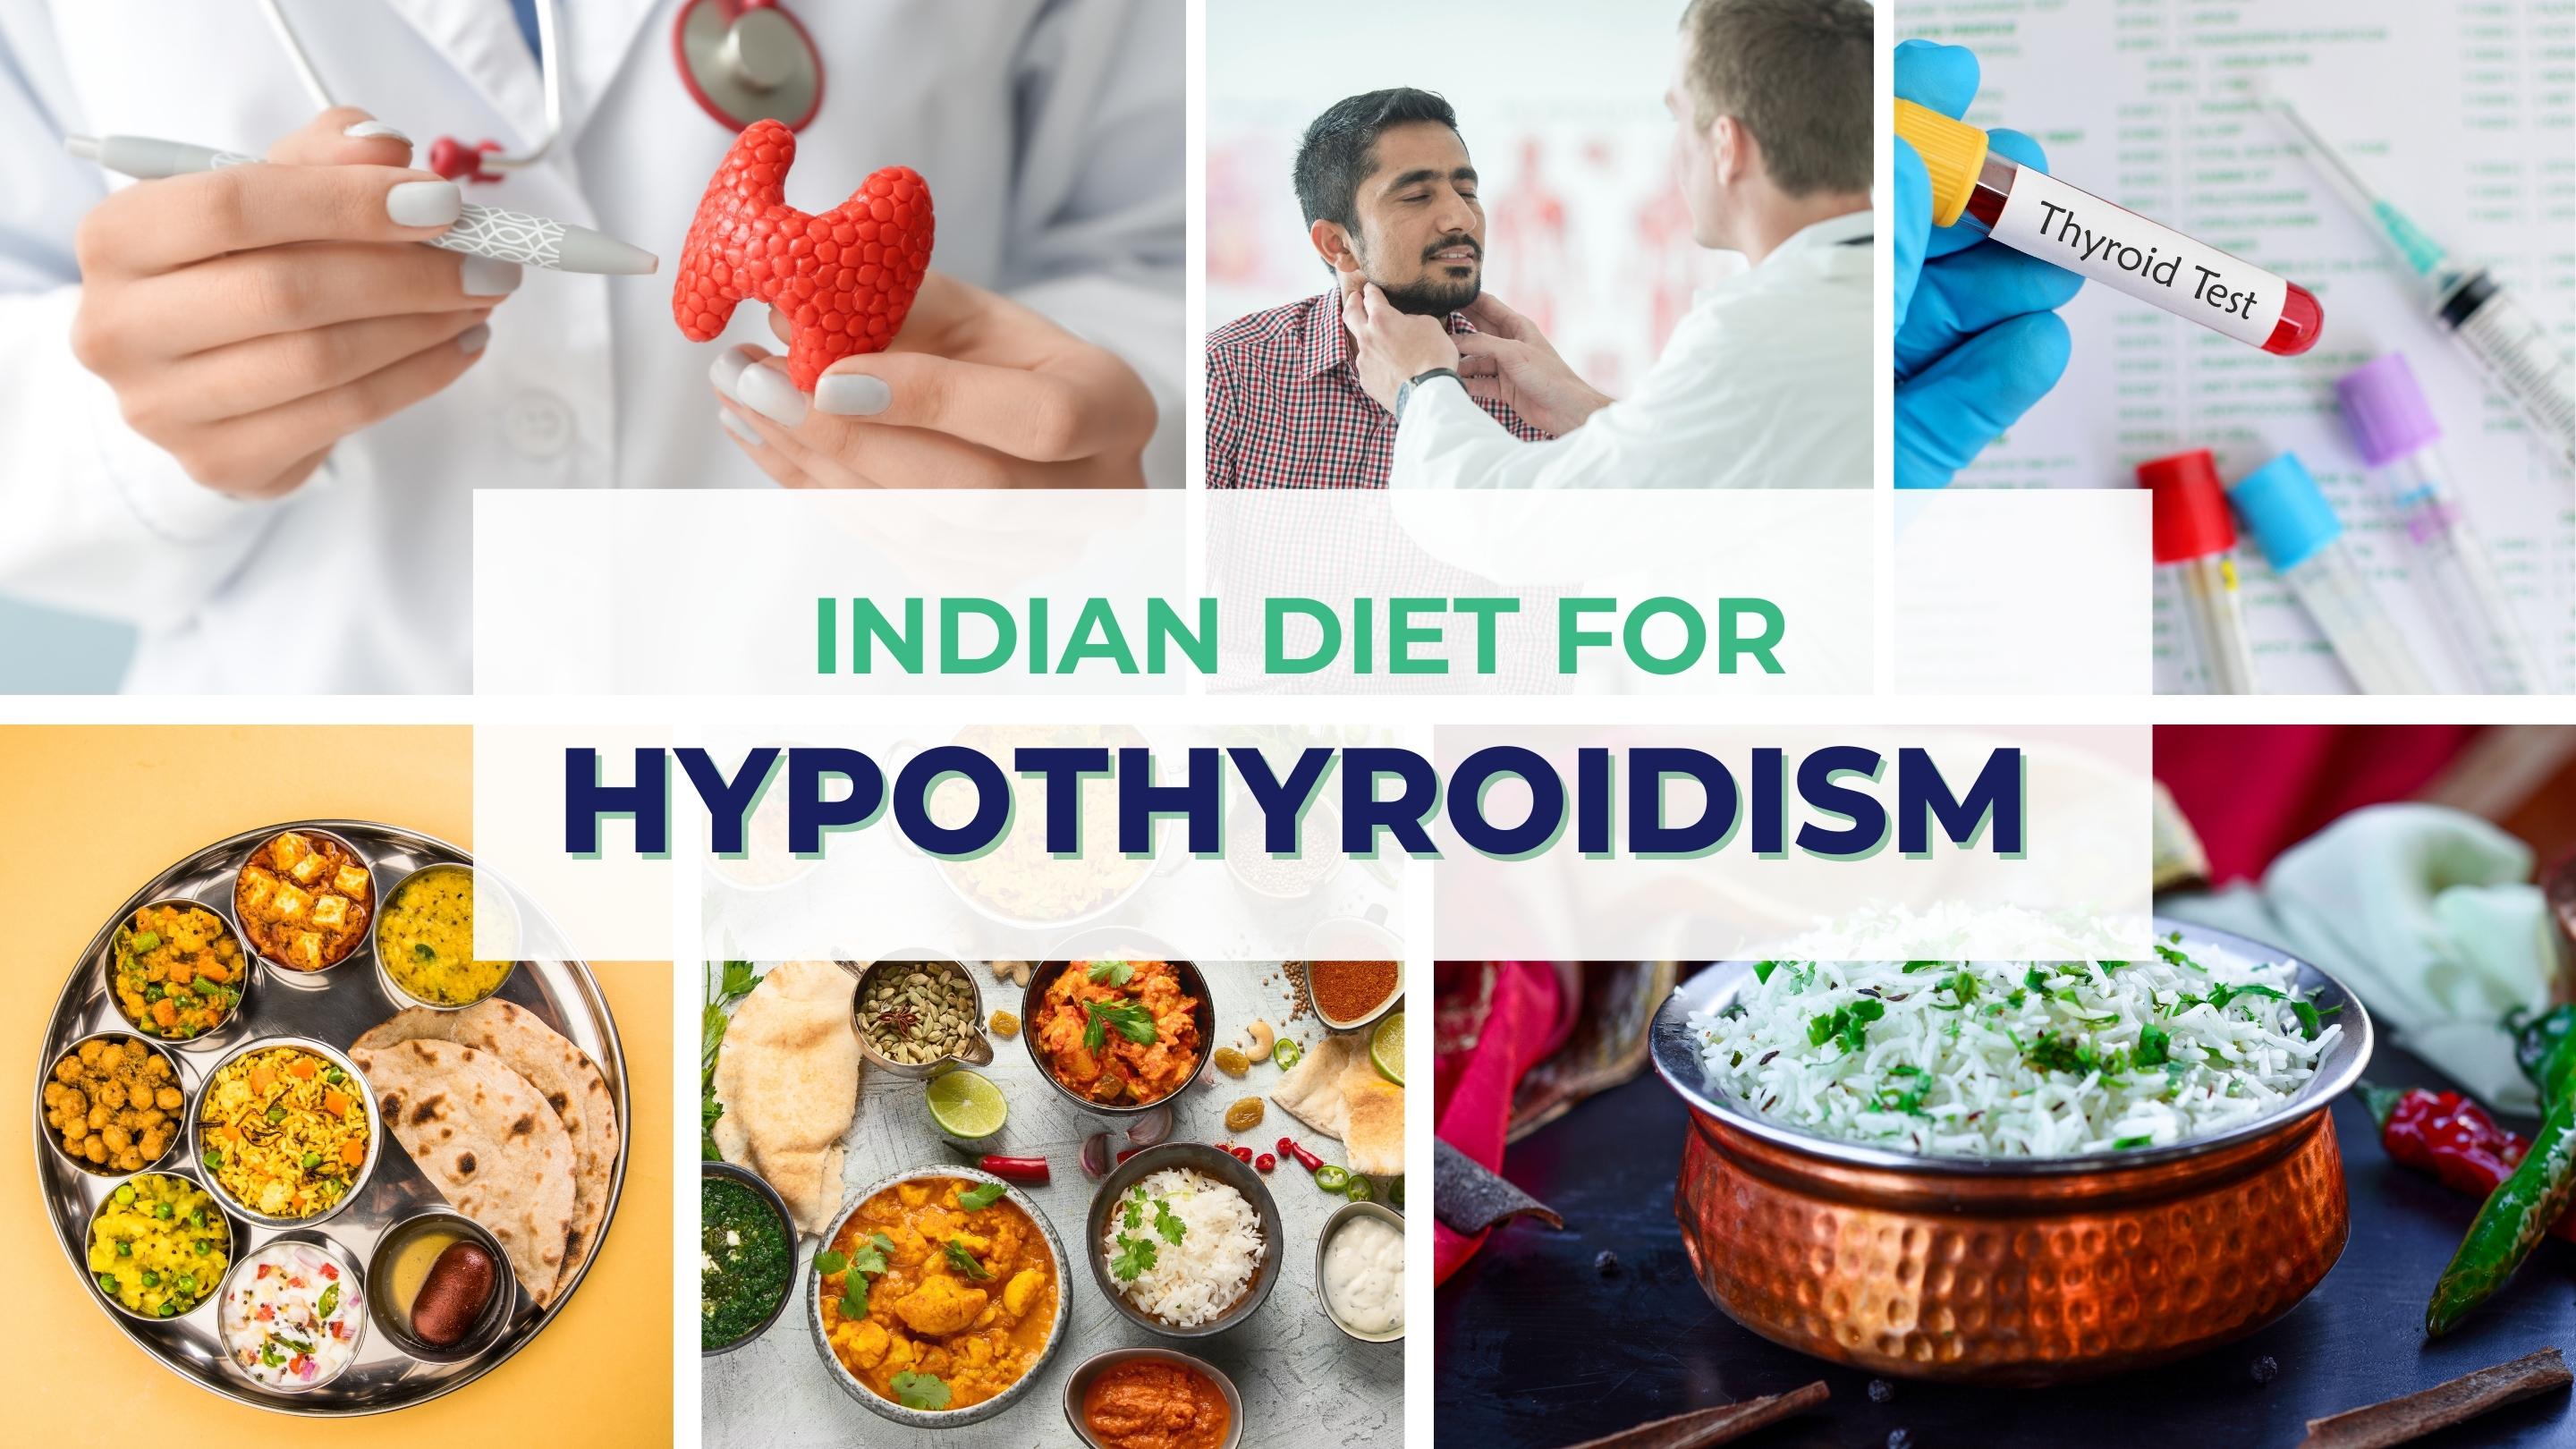 Indian diet for hypothyroidism